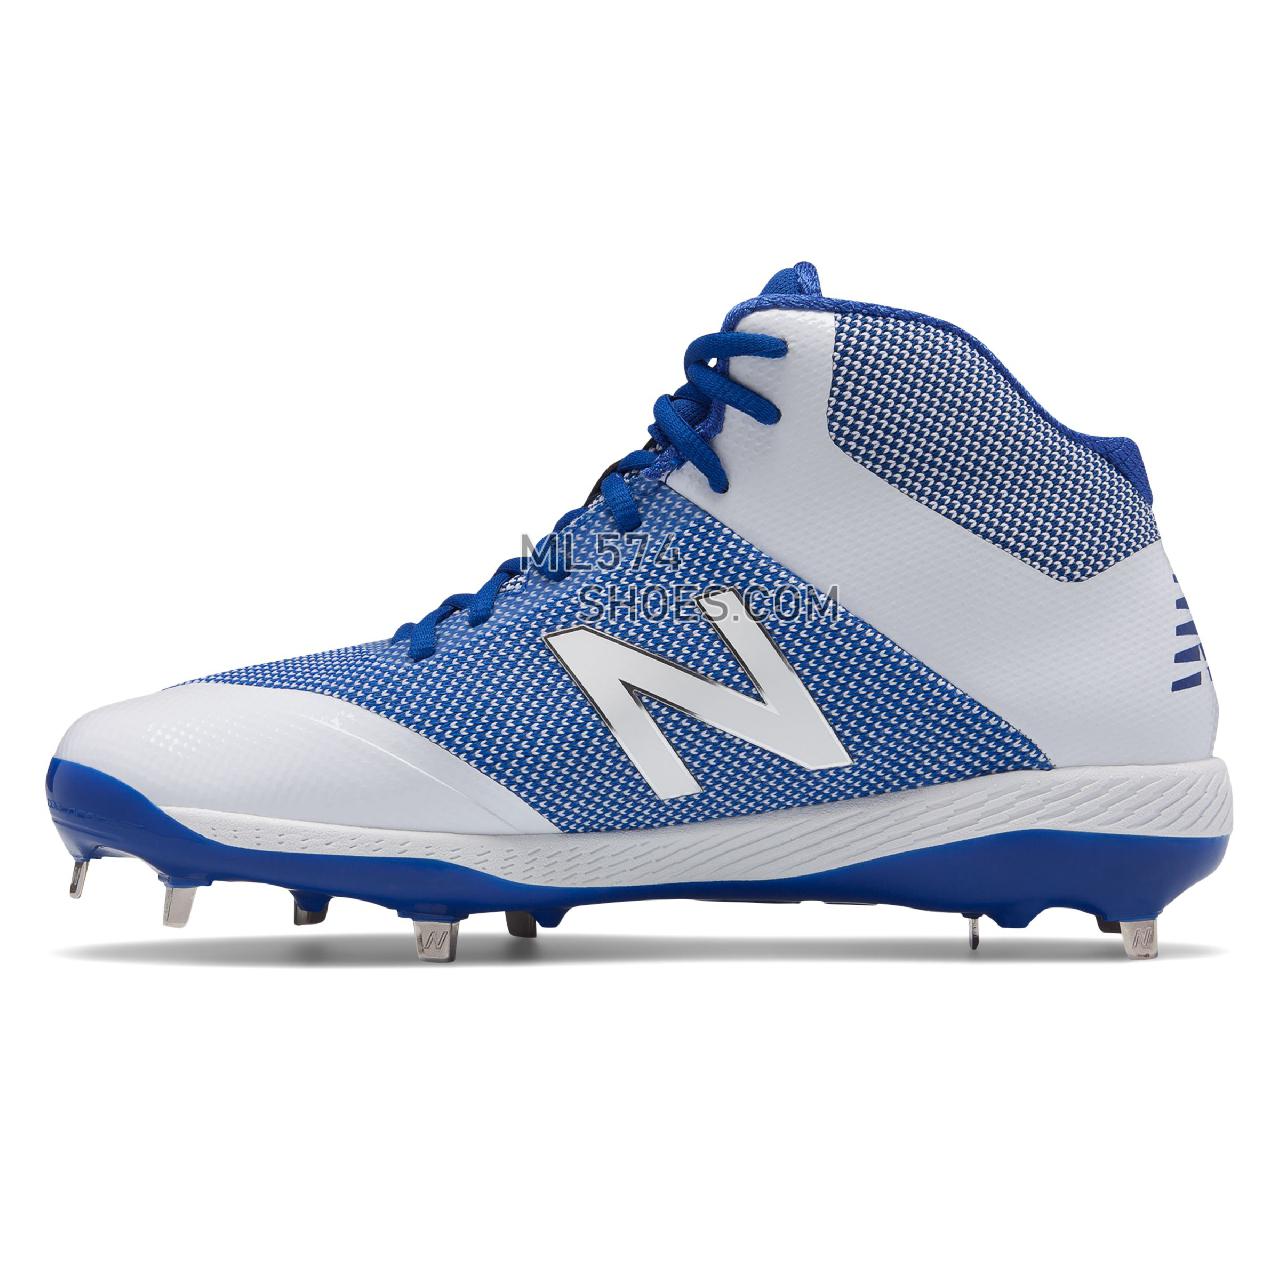 New Balance Mid-Cut 4040v4 - Men's 4040 - Baseball Royal Blue with White - M4040TB4